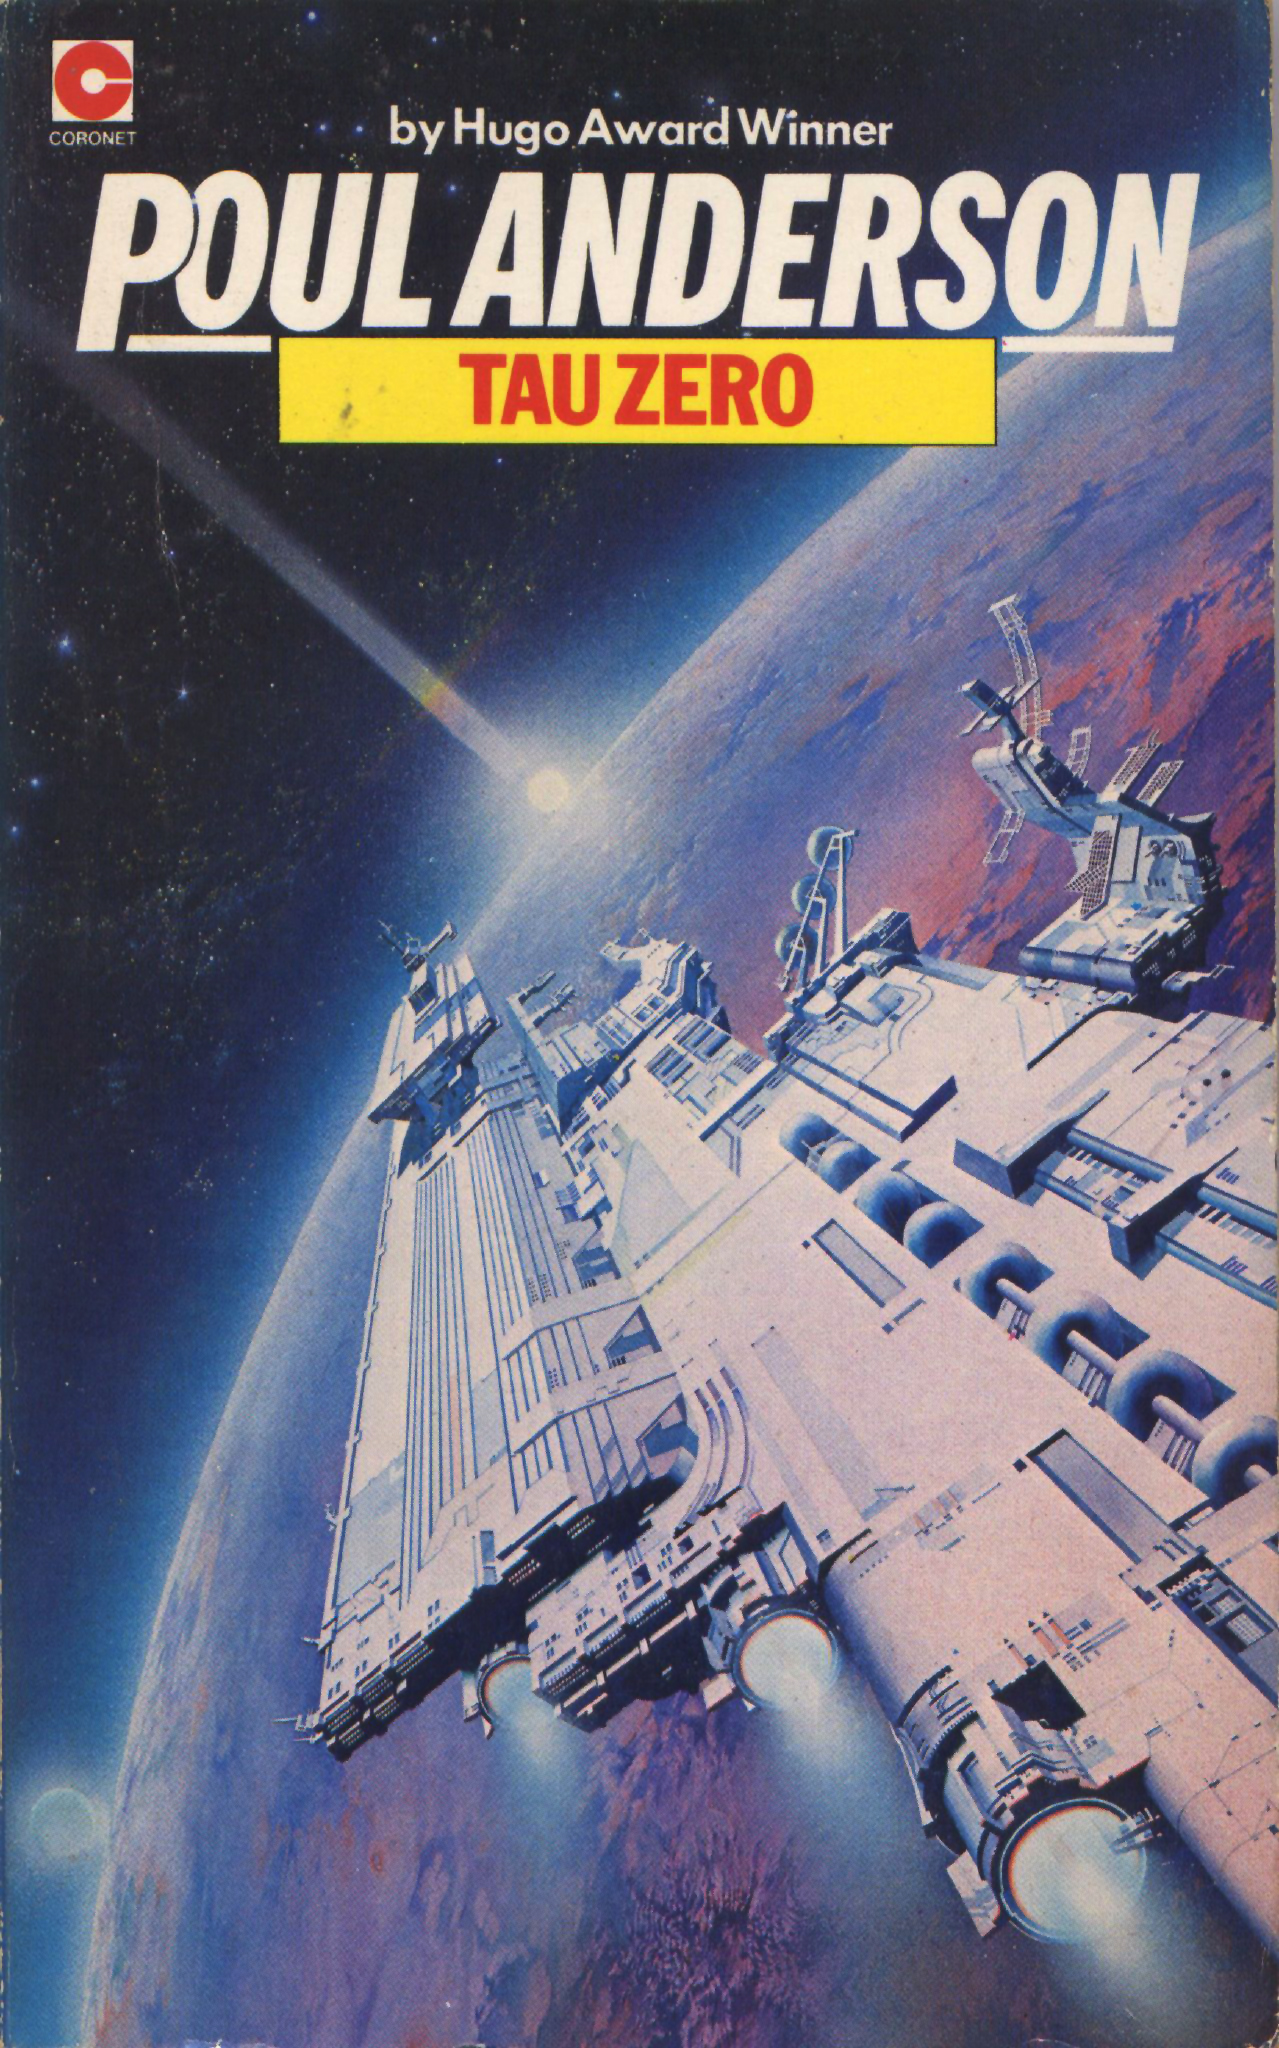 the cover of a novel on an alien ship